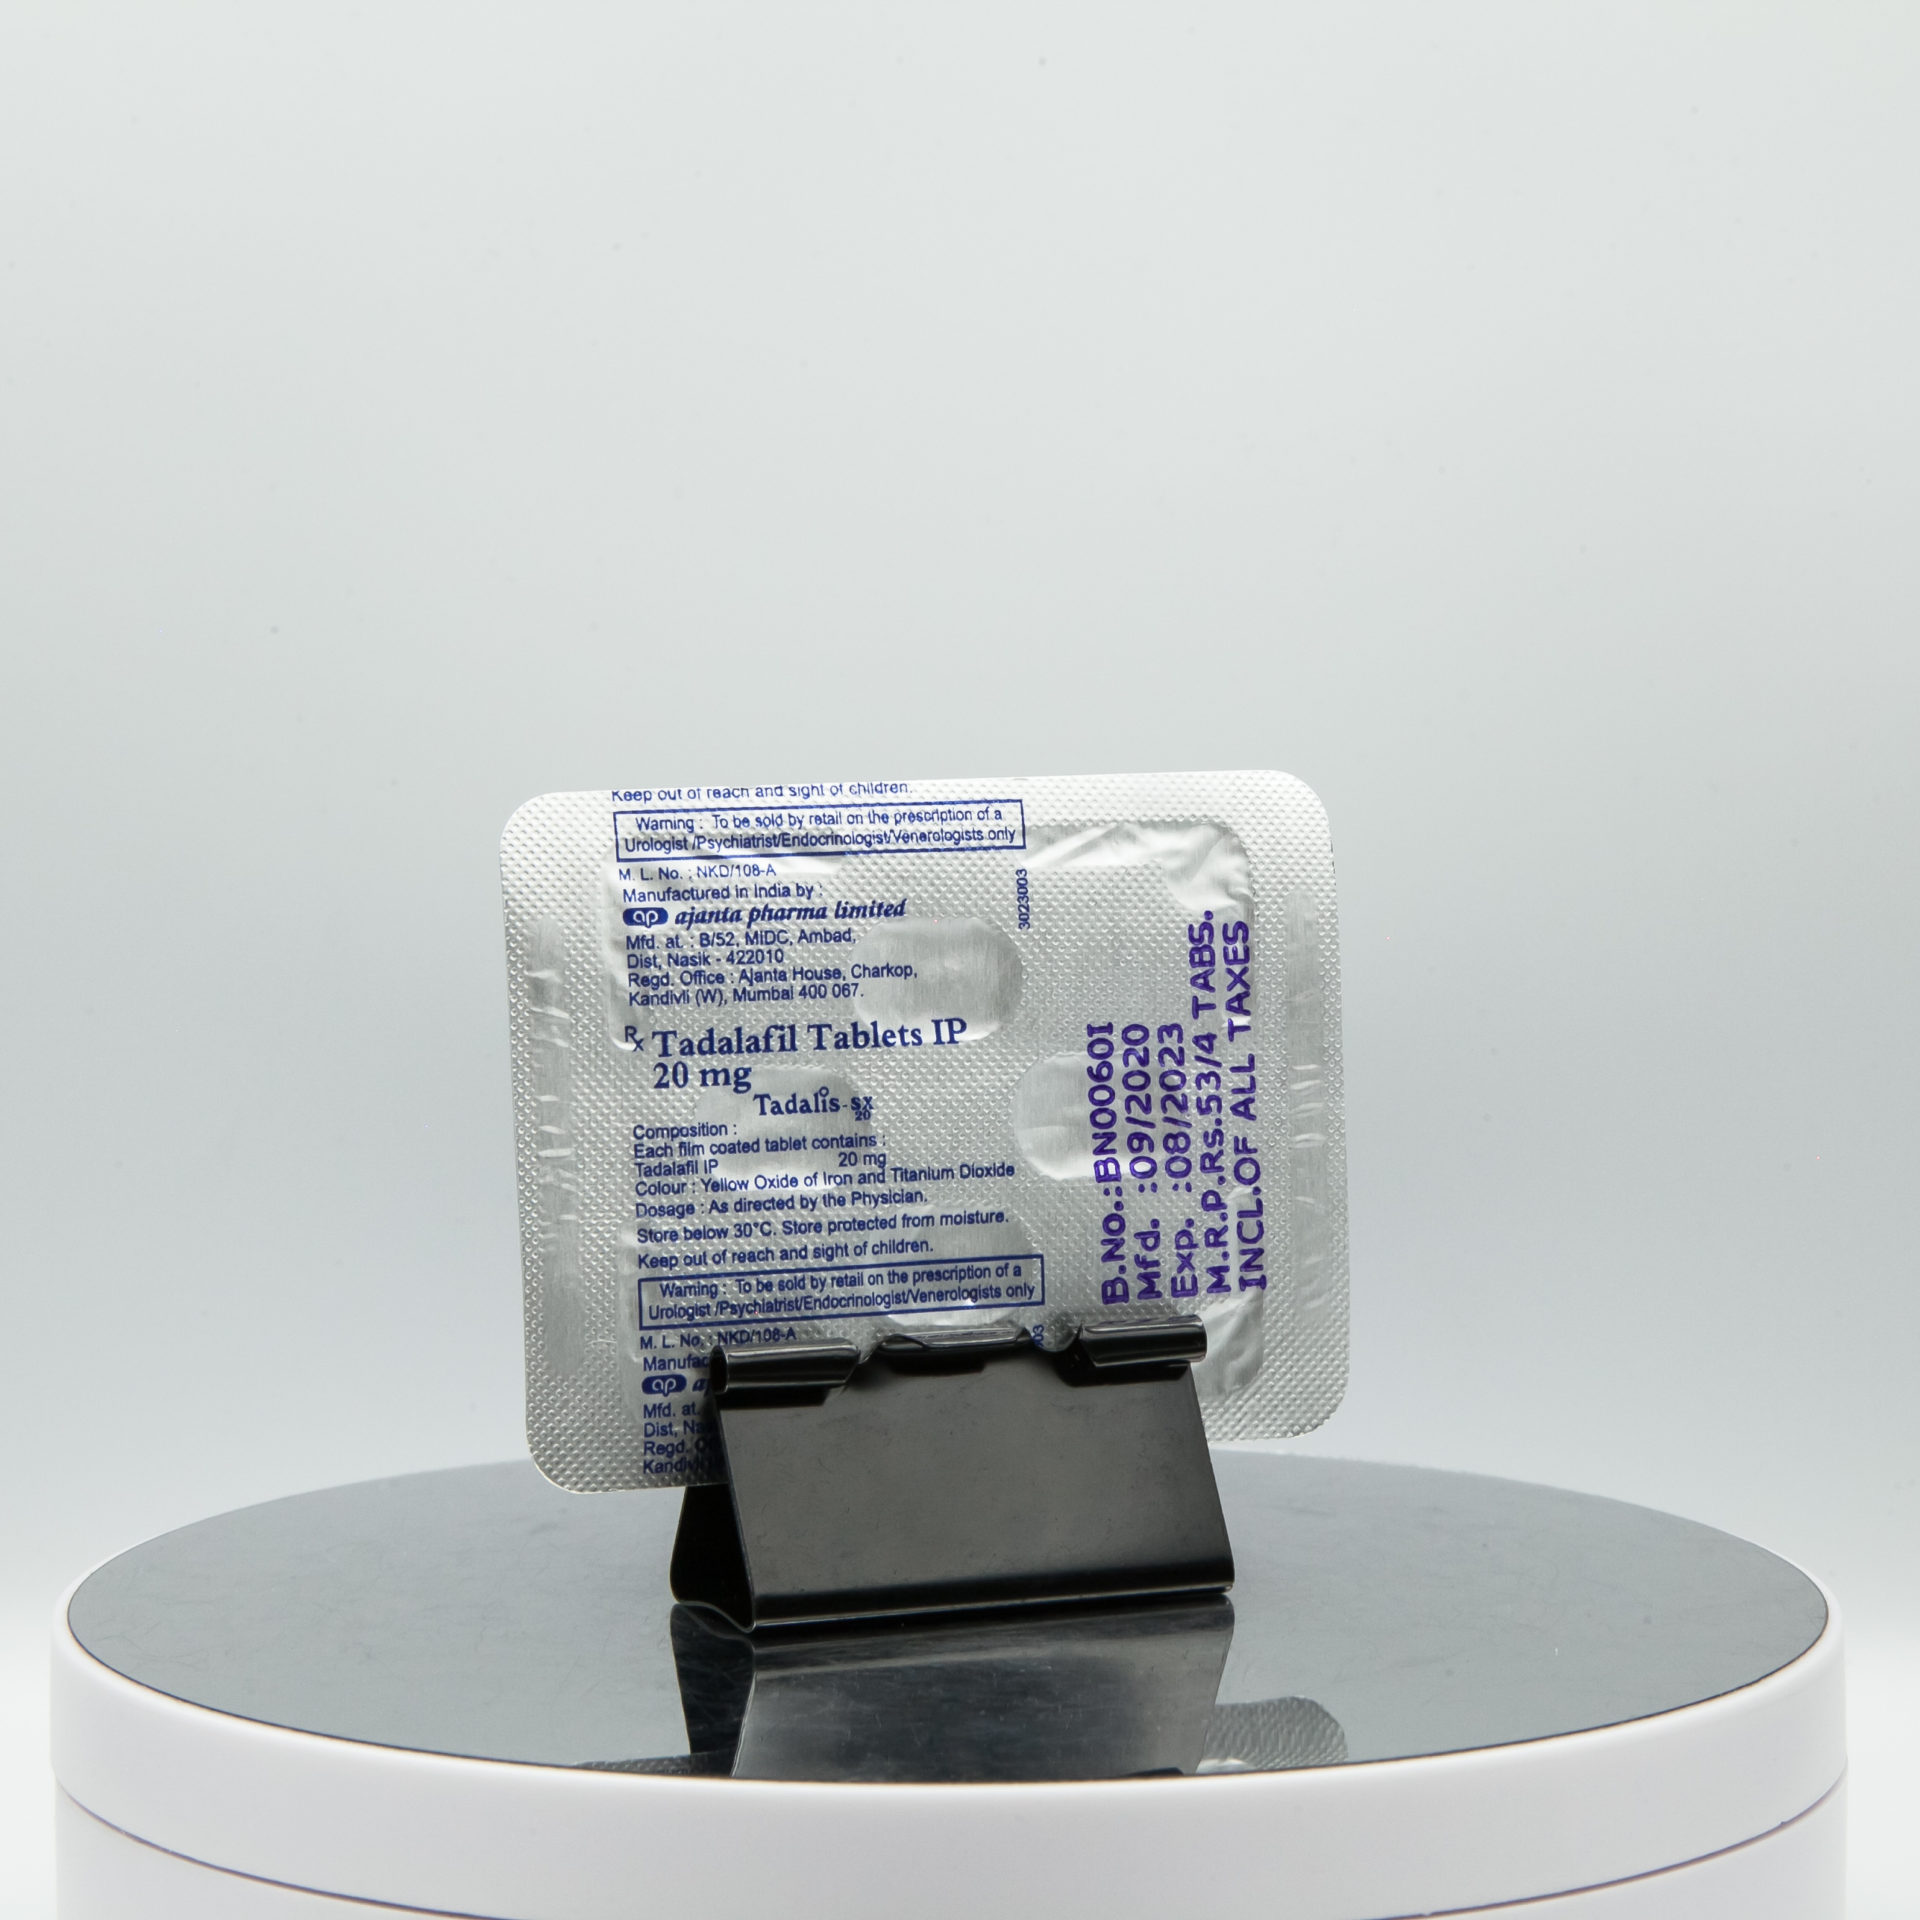 Tadalis-SX 20 (Tadalafil Tablets IP) 20 mg Ajanta Pharma Tadalafil Citrate (Cialis Generic) 3